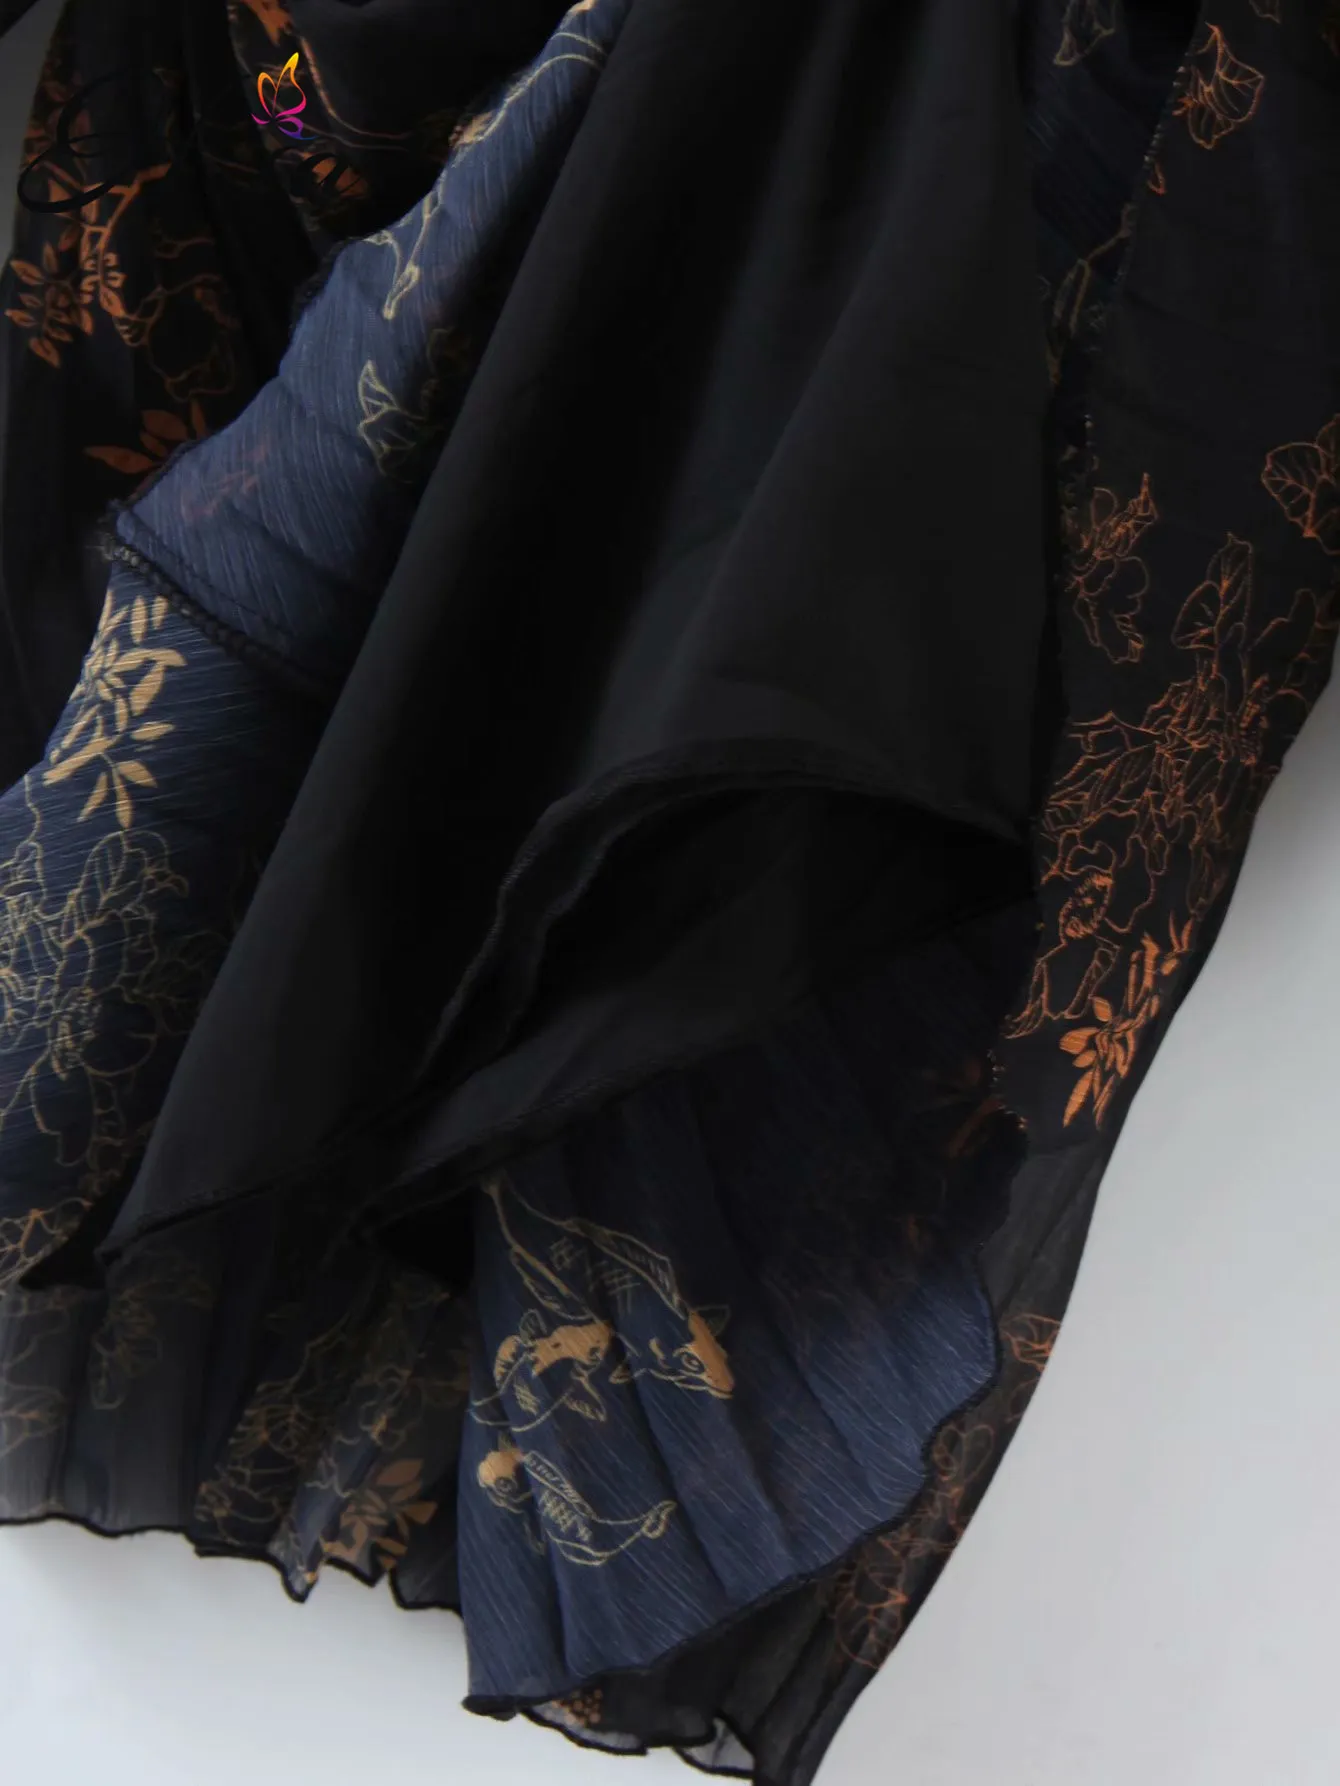 H.SA vrouw jurk herfst winter elegante zwarte bloemen vestidos lange mouw losse vintage jurken vrouwen kleding geplooide gewaad 210417